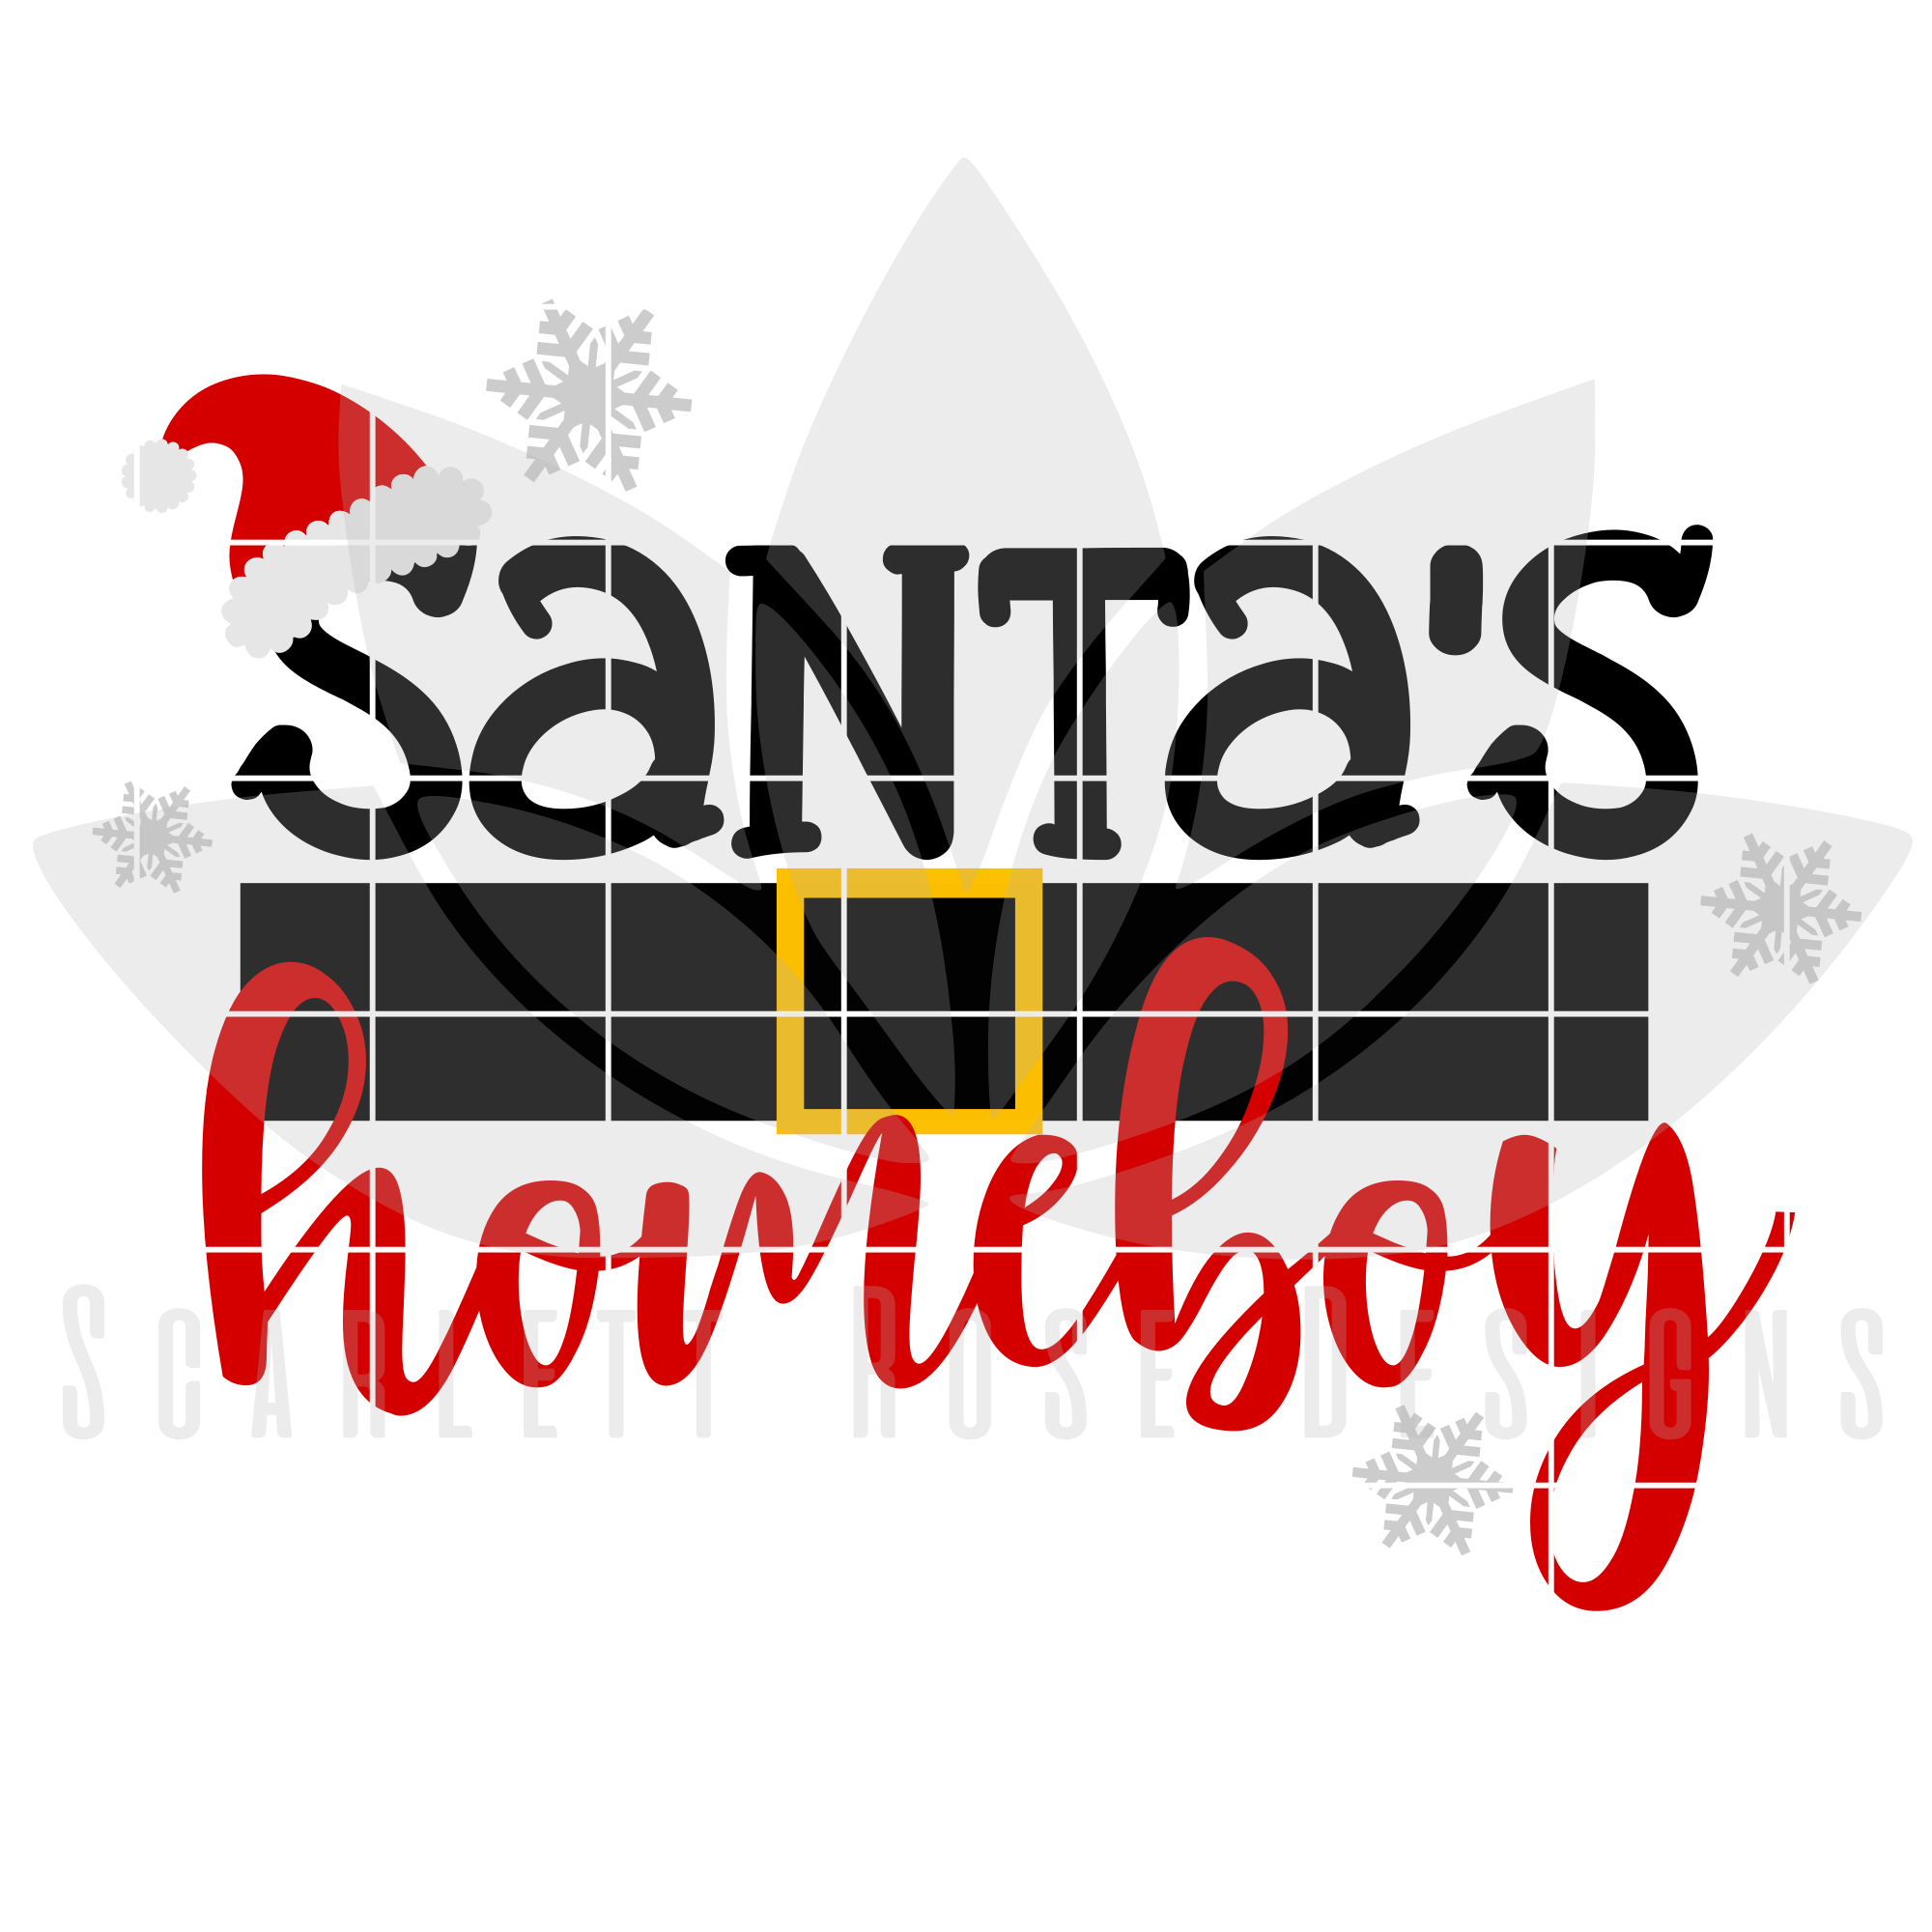 Download Christmas SVG, DXF, Santa's Homeboy cut file - Scarlett Rose Designs